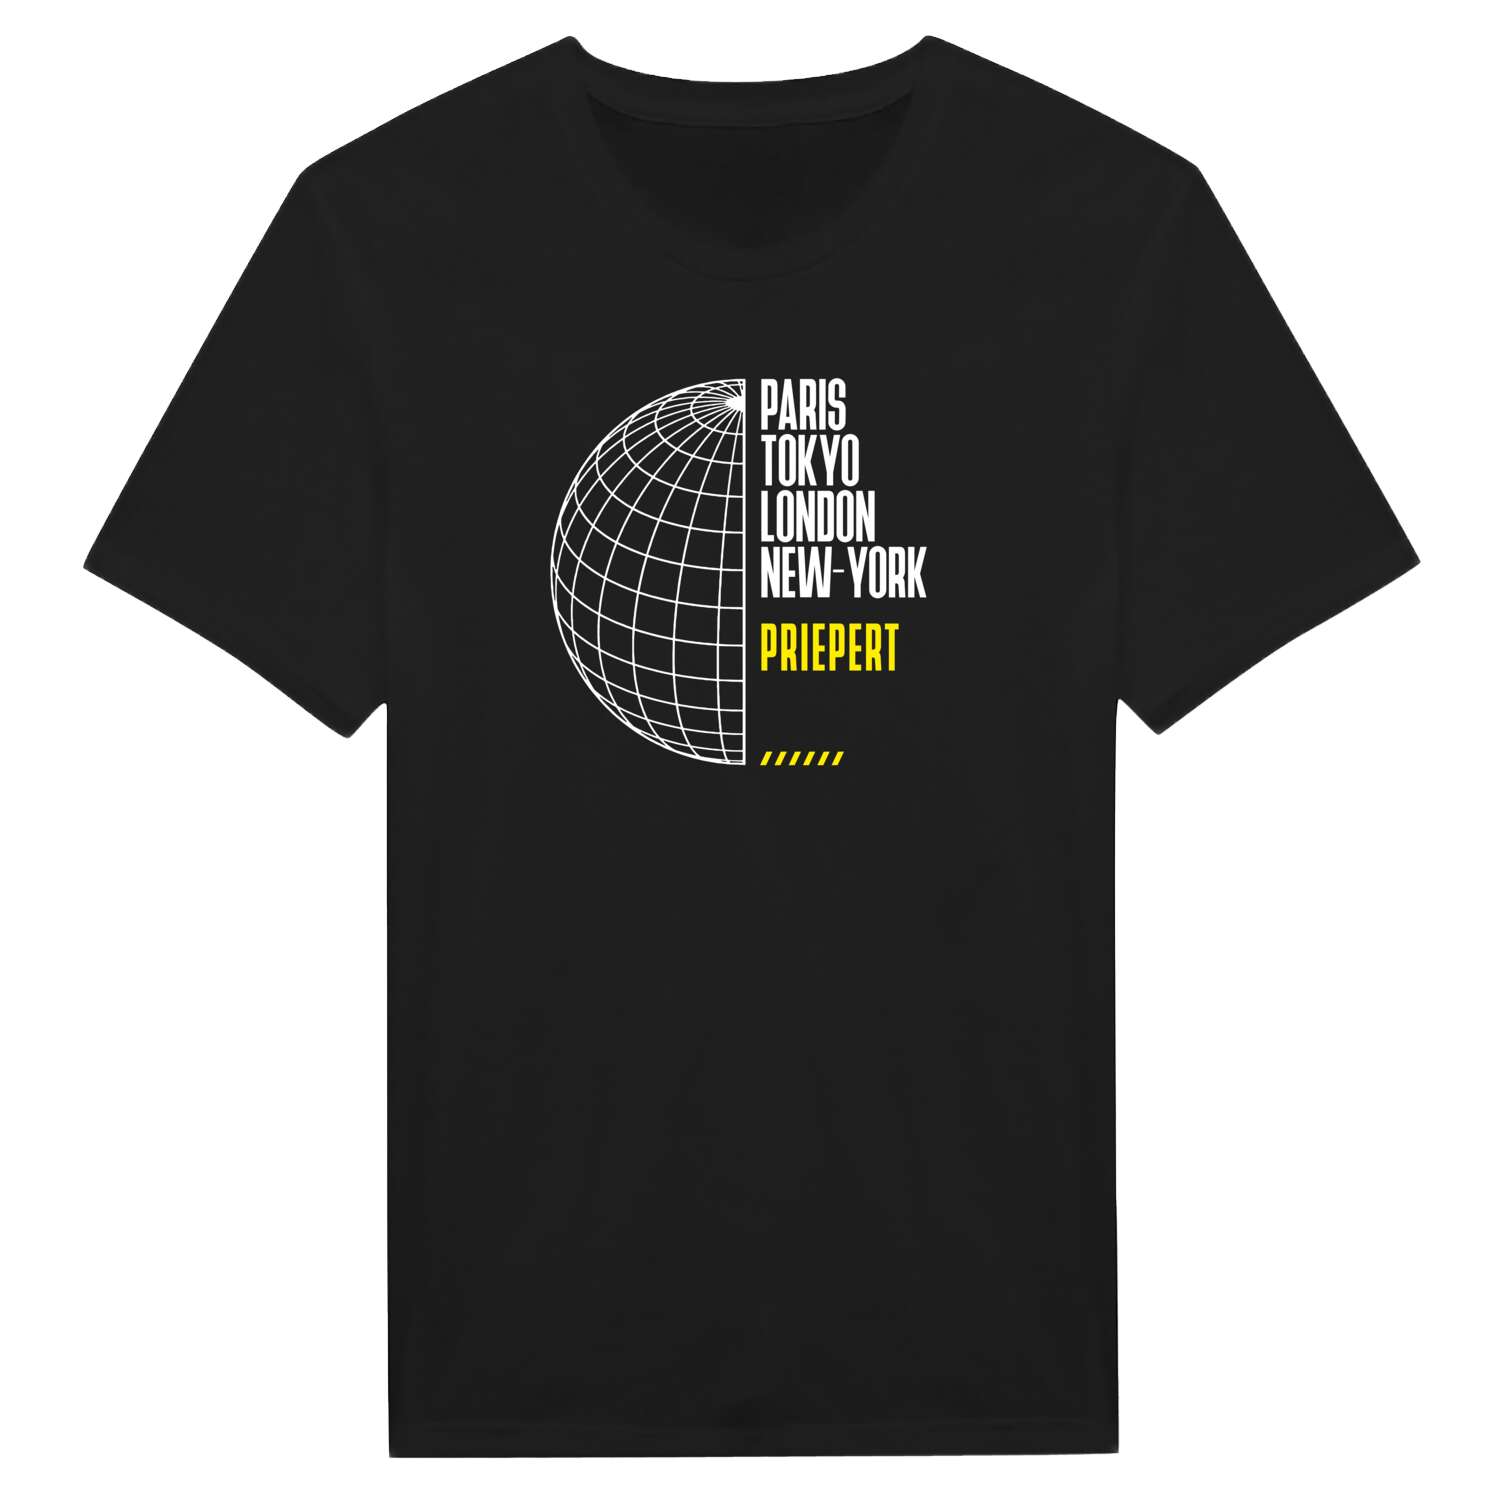 Priepert T-Shirt »Paris Tokyo London«